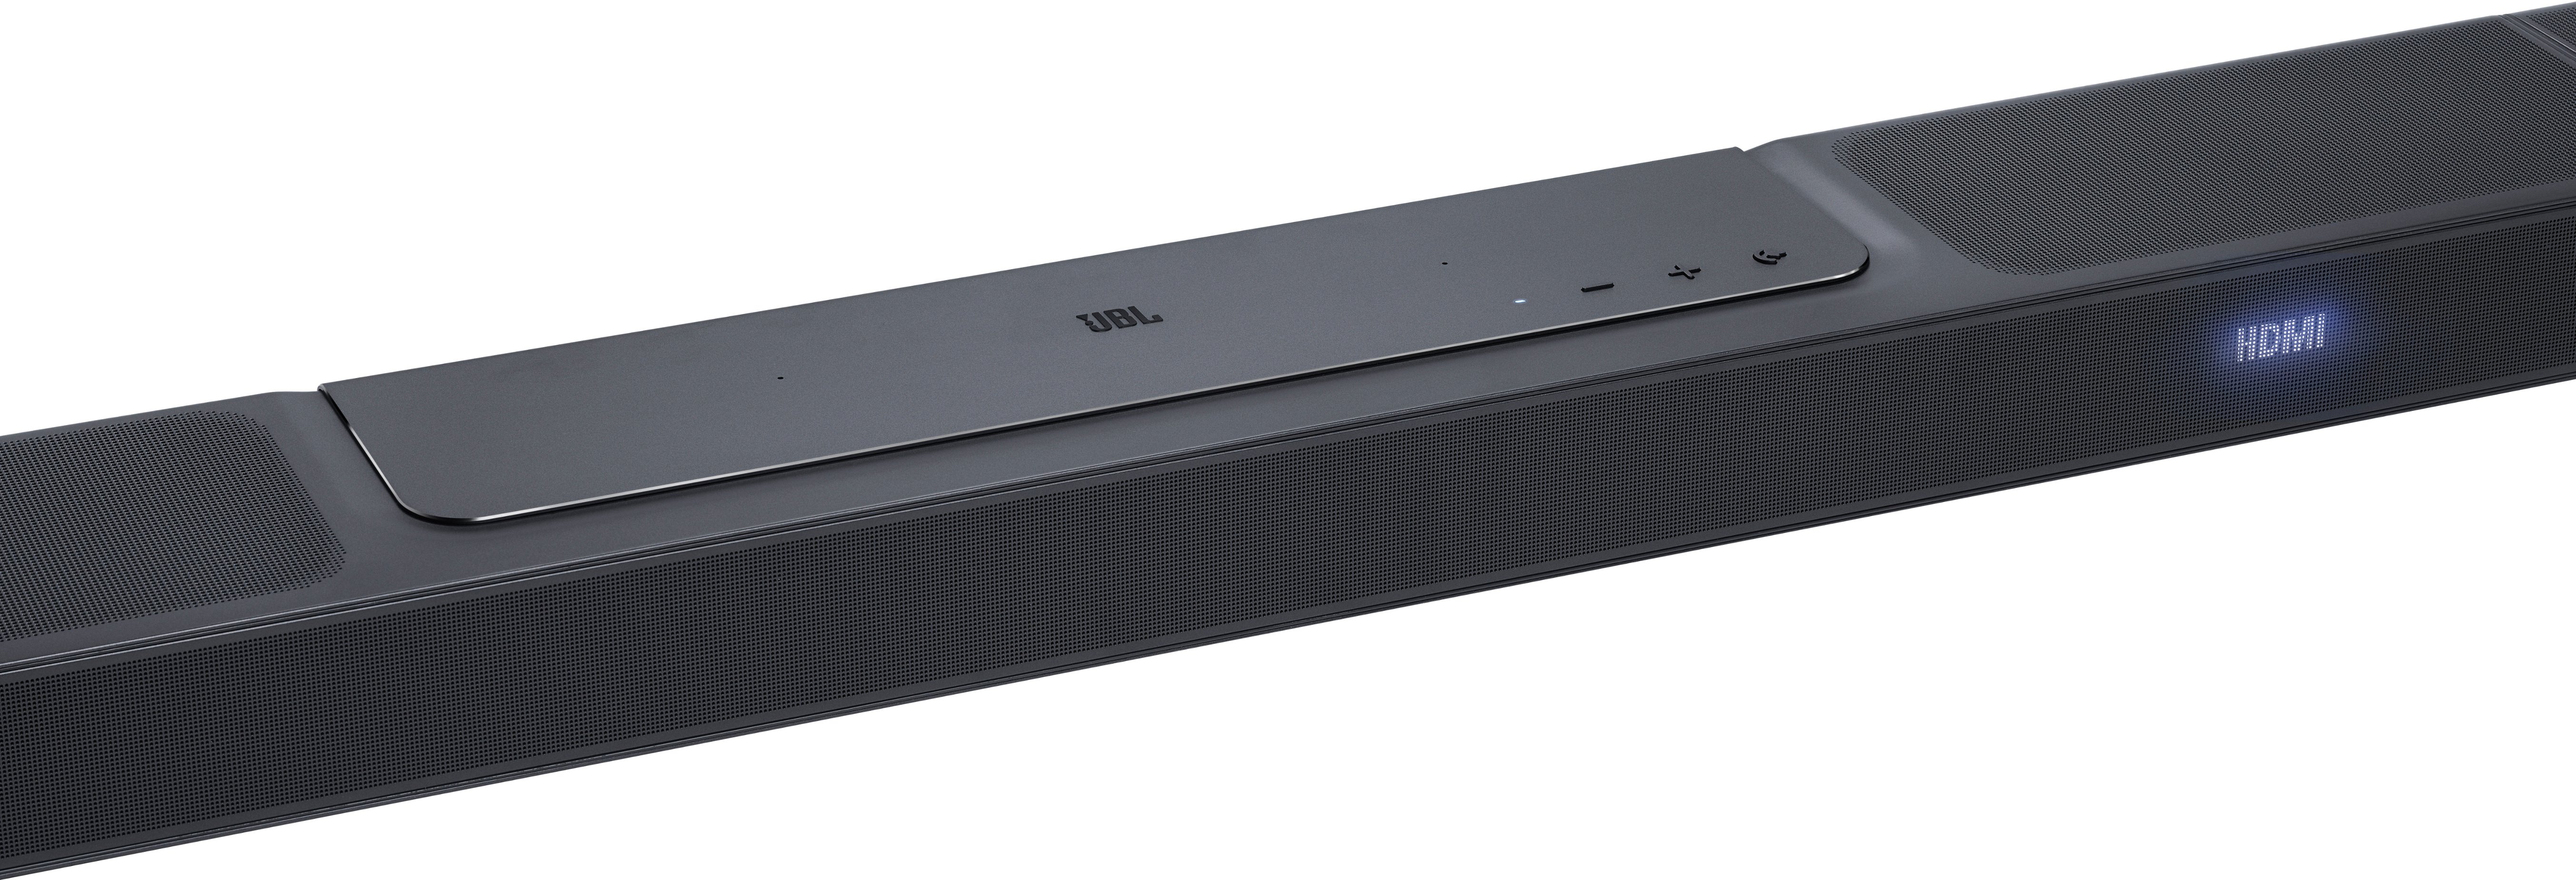 JBL BAR 1300X 11.1.4-channel soundbar Best Buy - with detachable surround JBLBAR1300BLKAM speakers Black